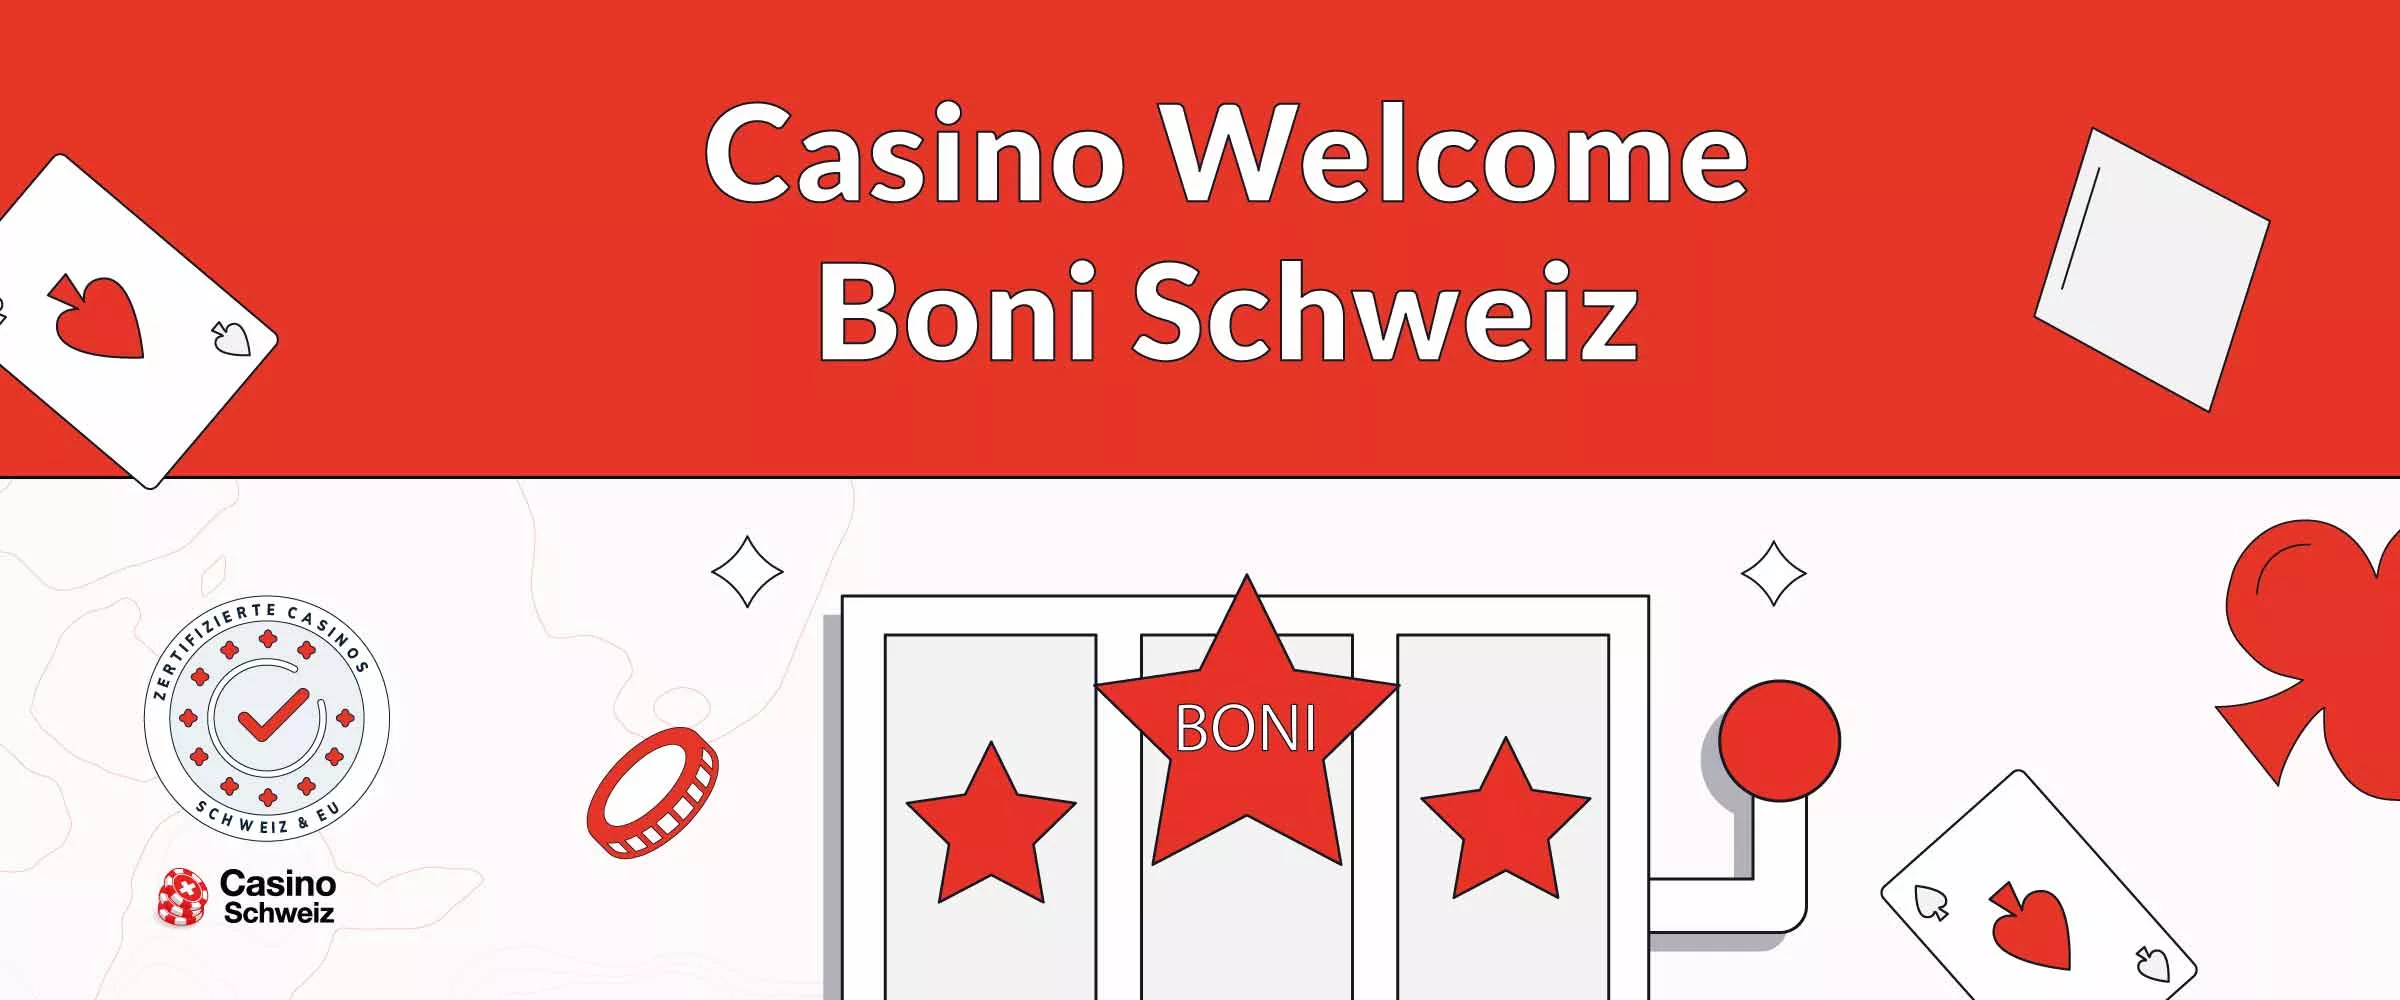 Casino Welcome Boni Schweiz